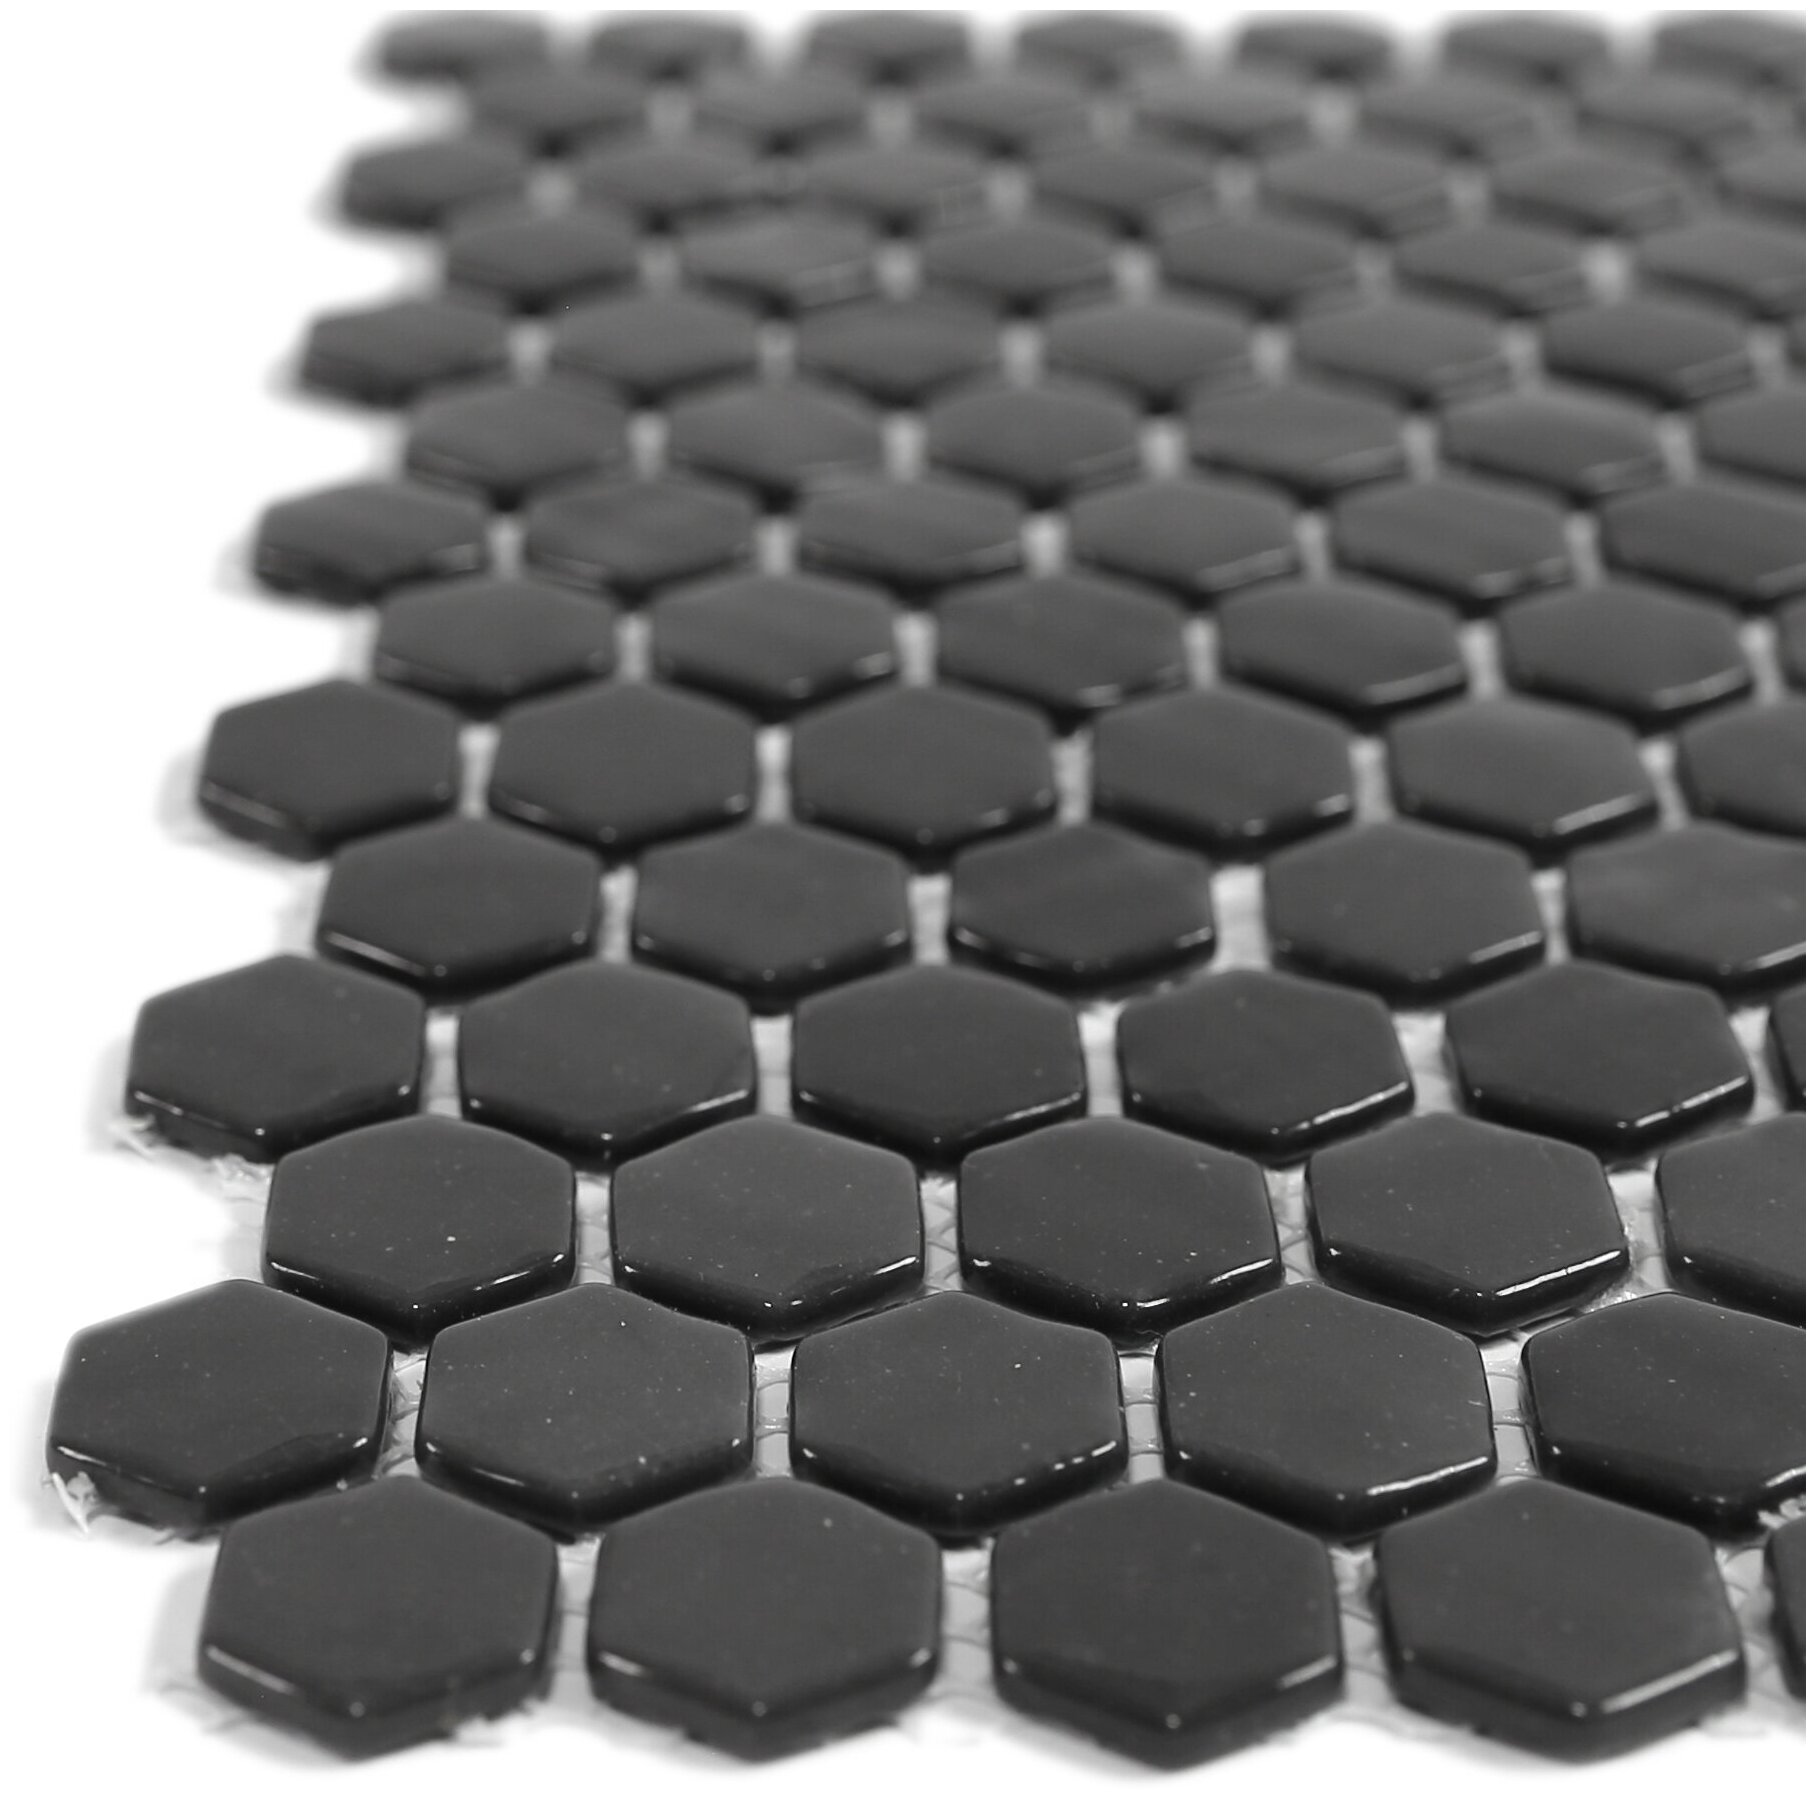 Мозаика Natural STP-BK001-HEX из глянцевого стекла размер 29х29 см чип 25 Hexagon мм толщ. 5 мм площадь 0.084 м2 на сетке